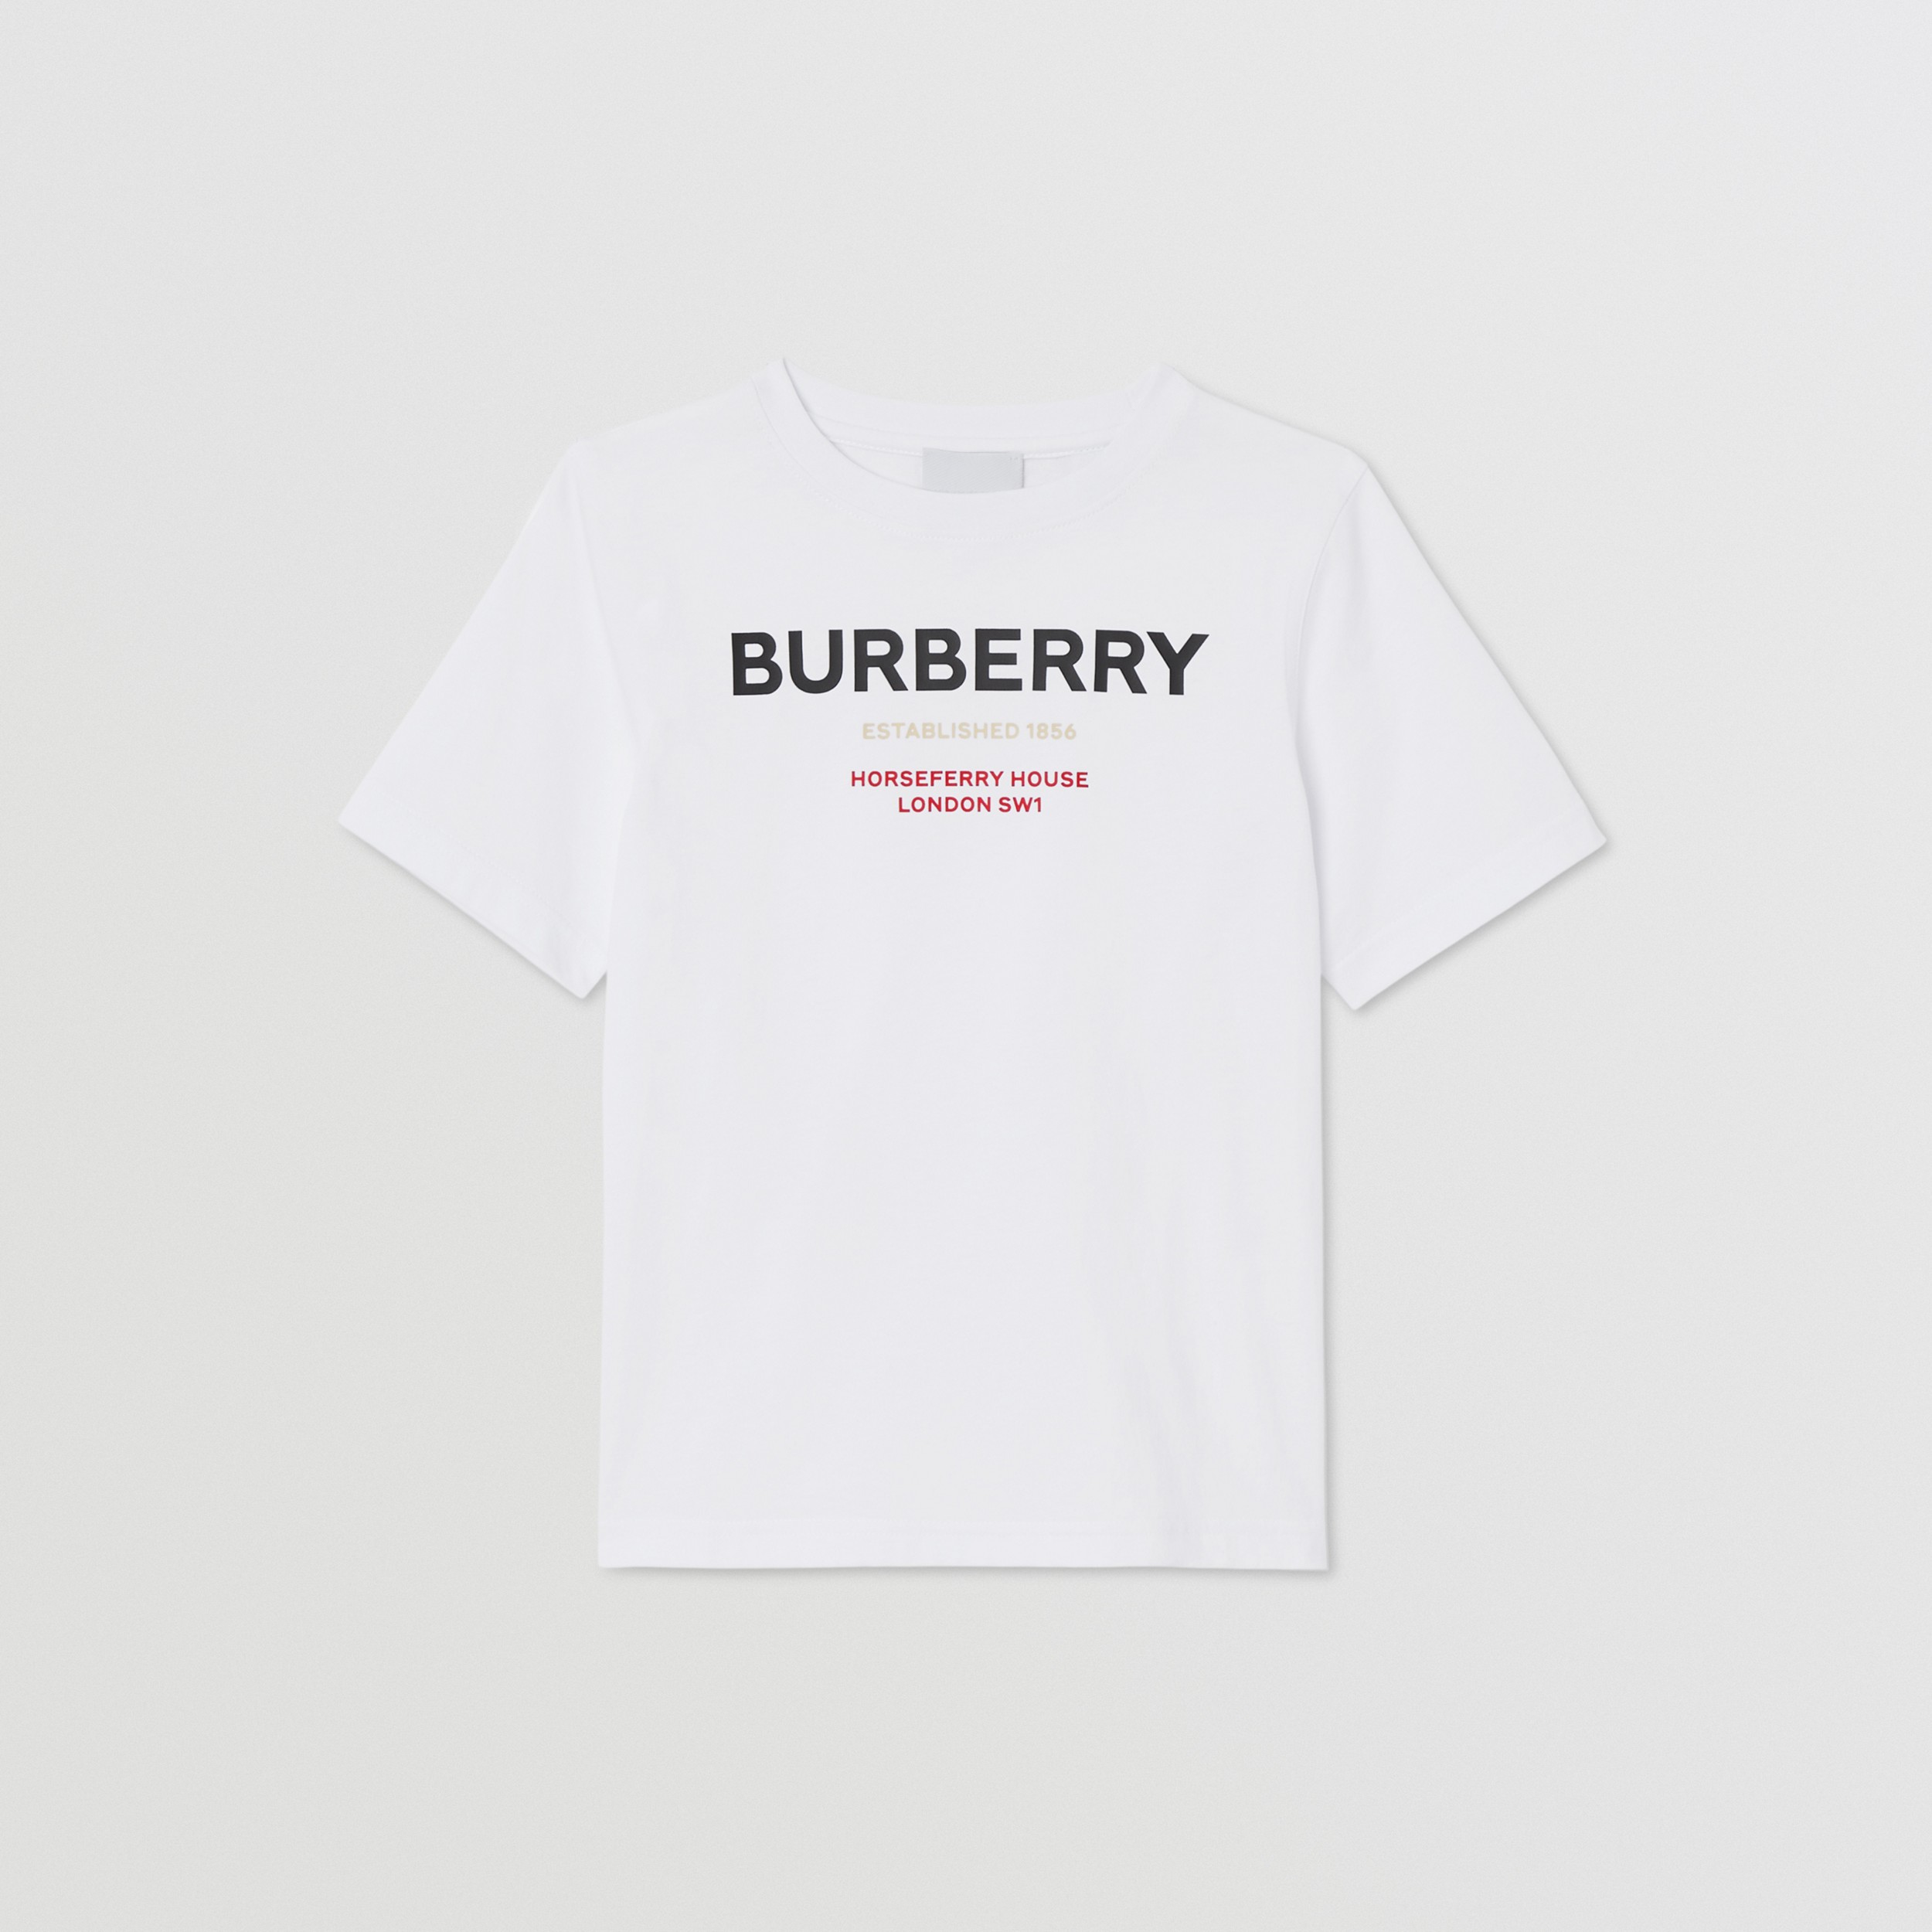 BURBERRY COTONE BIANCO LOGO T-shirt Unisex 6 anni. 